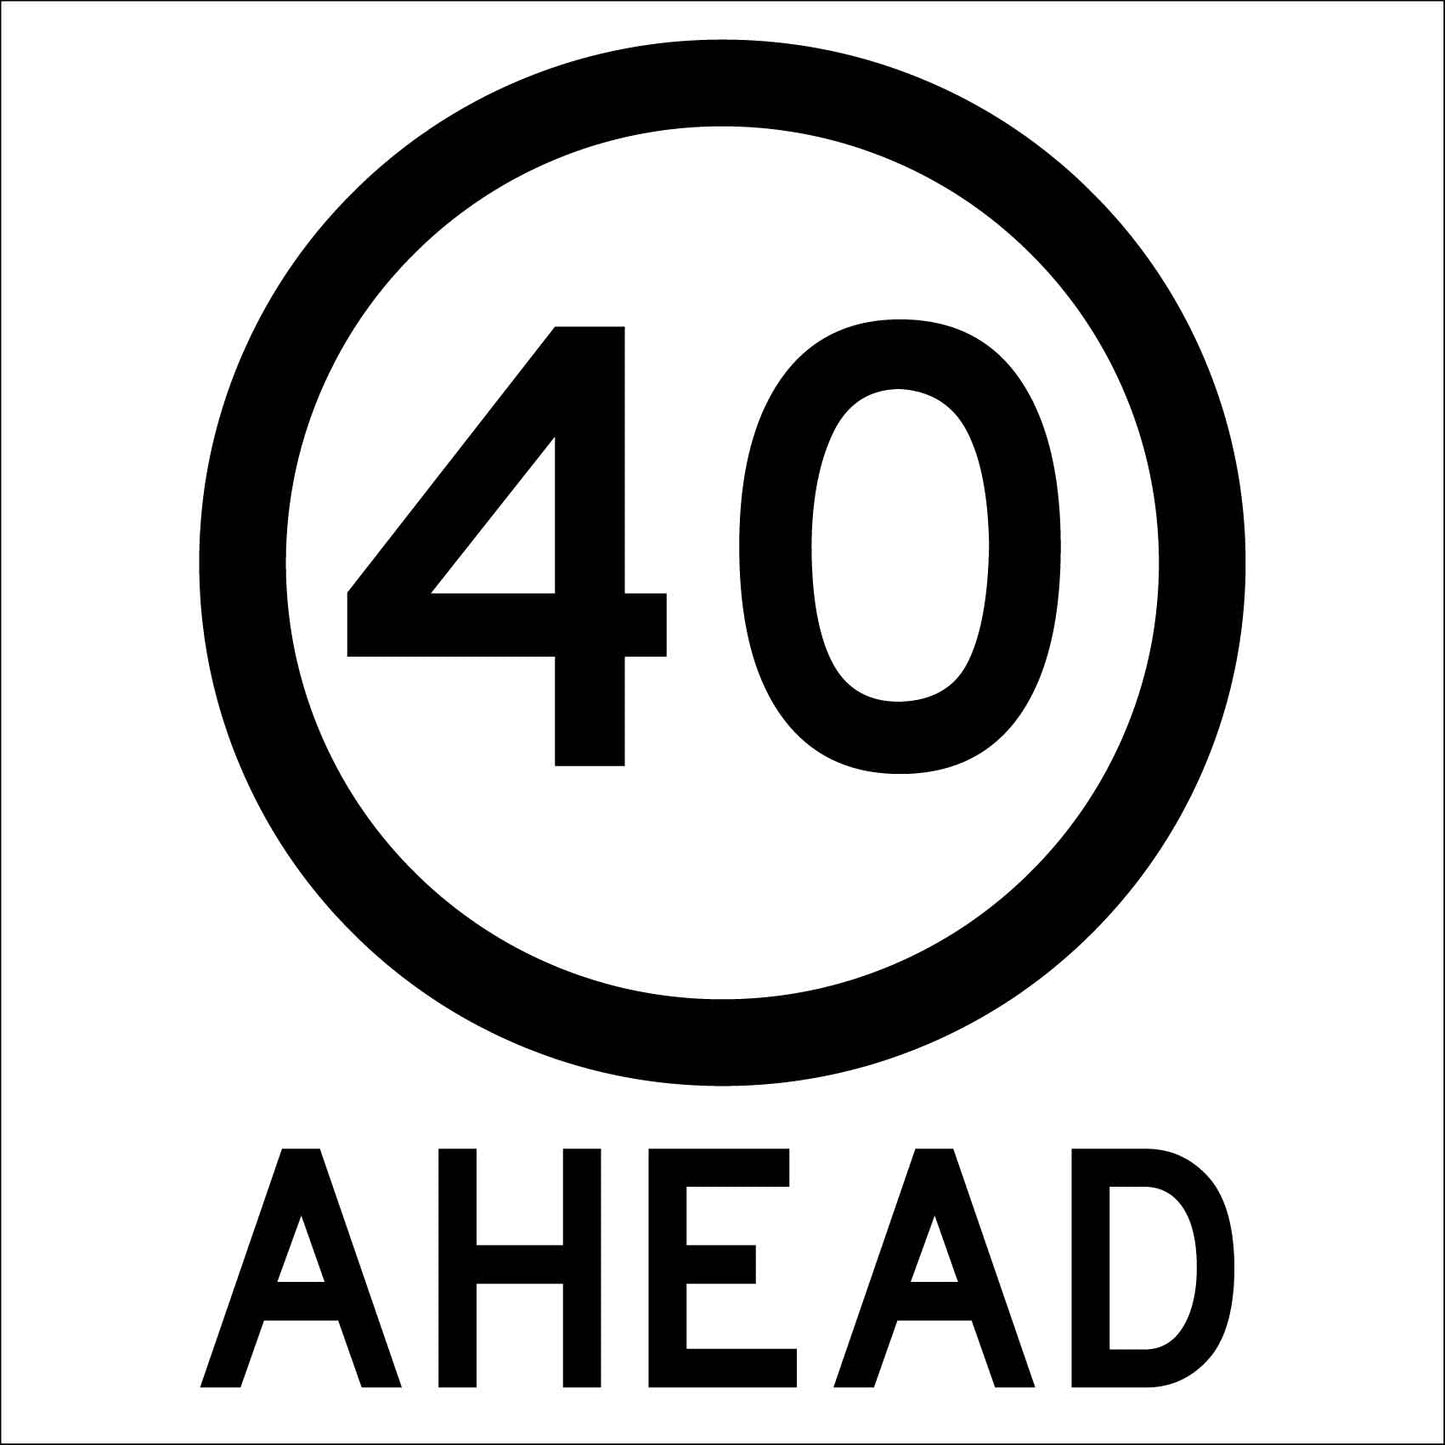 40km Ahead Multi Message Traffic Sign